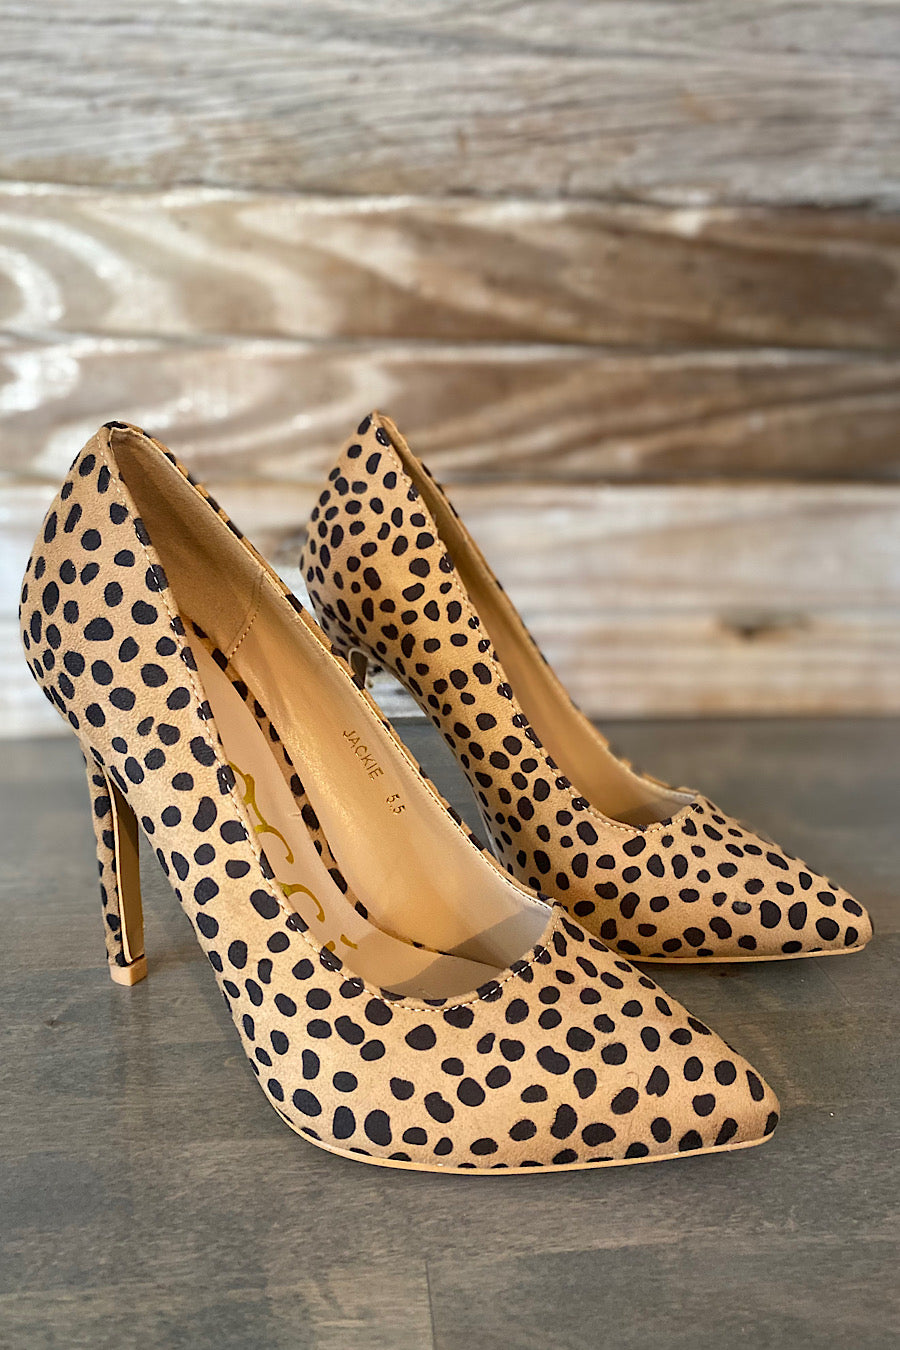 GIUSEPPE ZANOTTI #39157 Leopard Style Ponyhair Platform Heels (US 7 EU 37)  – ALL YOUR BLISS